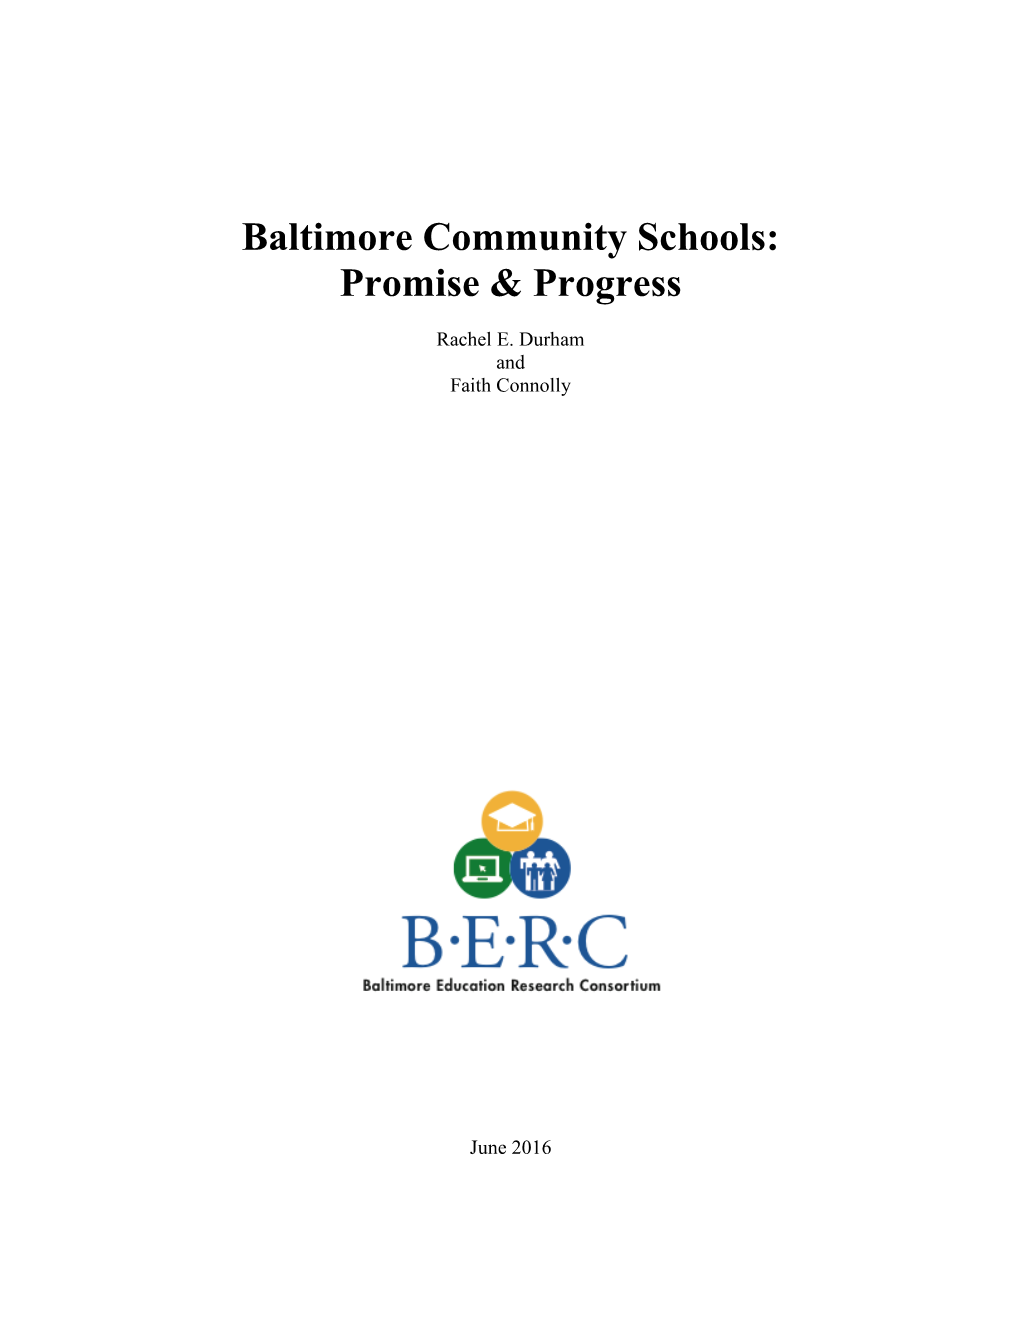 Baltimore Community Schools: Promise & Progress